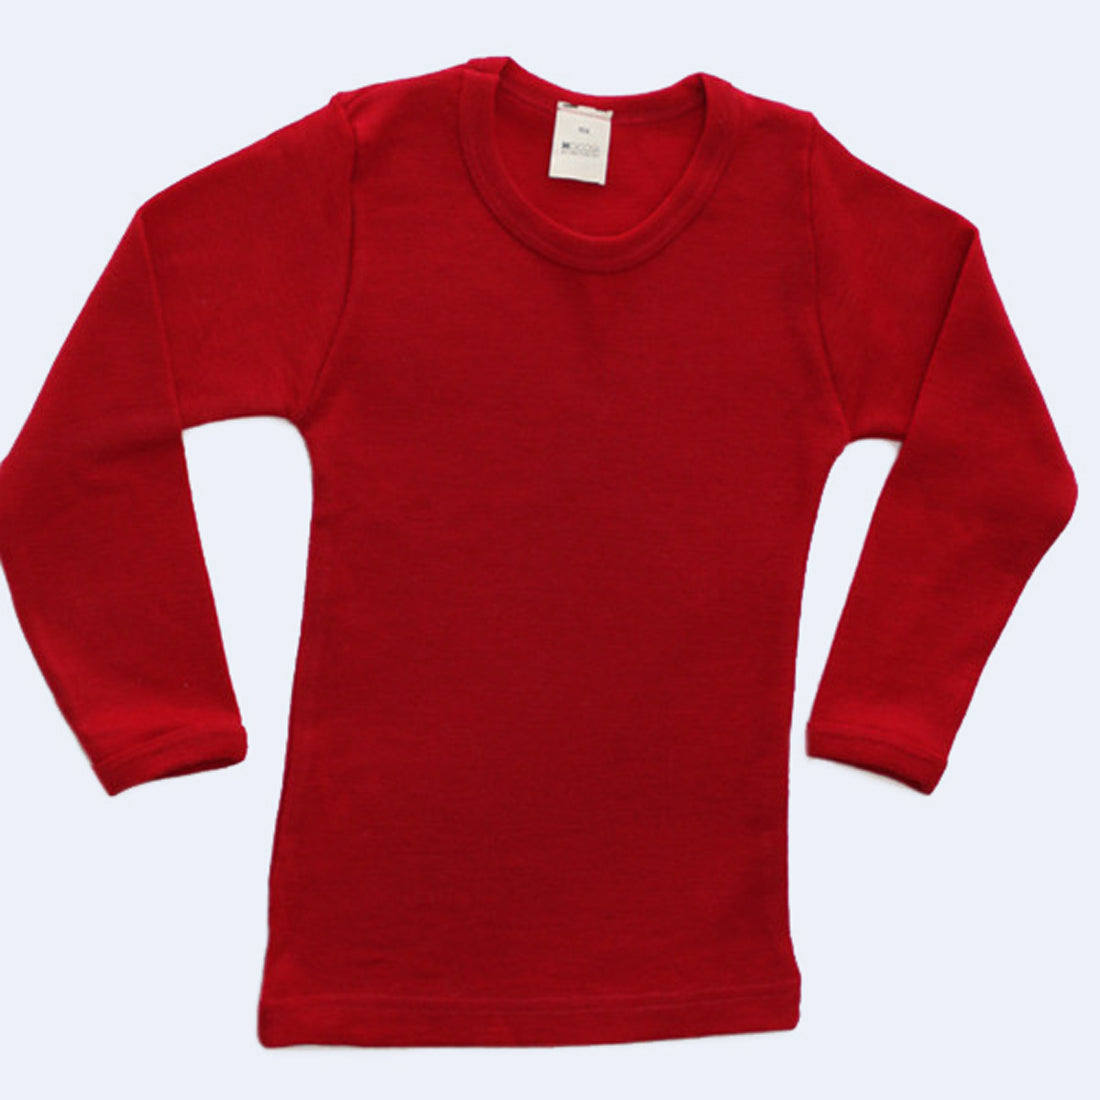 HOCOSA Kid's Organic Merino Wool Underwear Shirt with Long Sleeves - VARIOUS COLORS